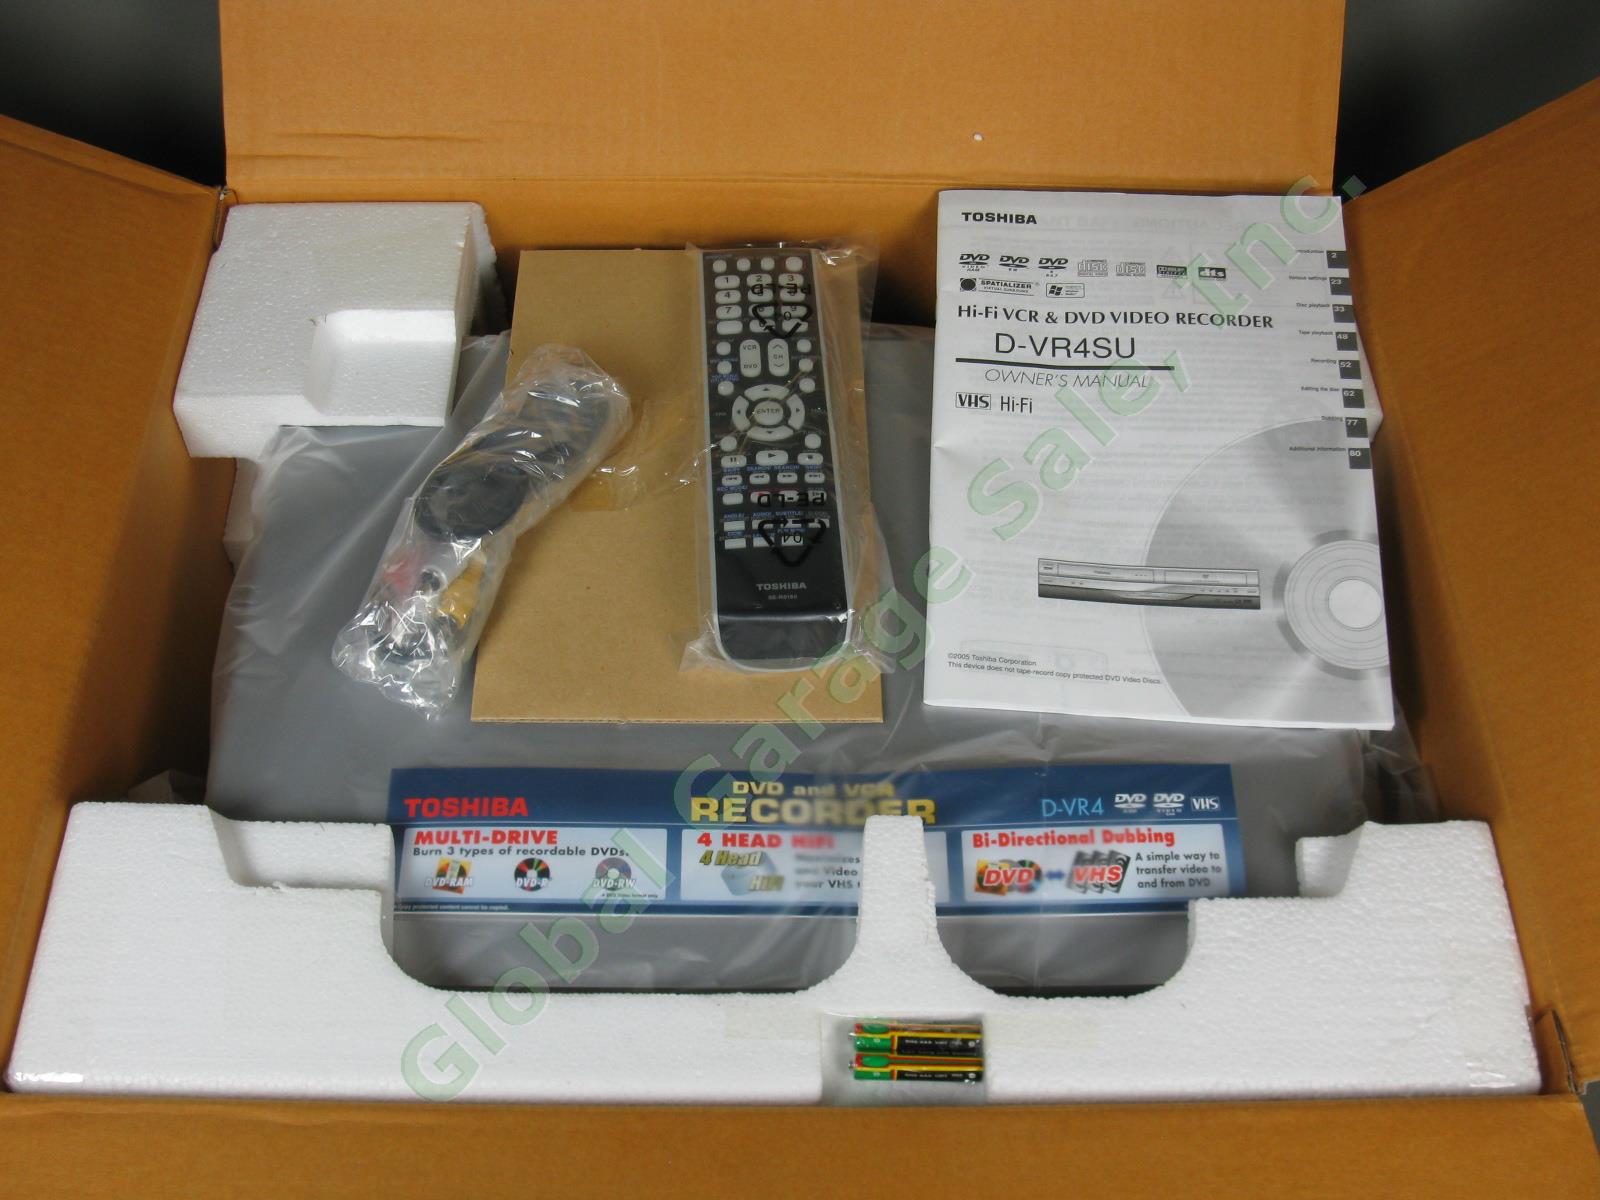 NEW IN BOX Toshiba VCR DVD Video CD-R CD-RW Player Recorder D-VR4SU No Reserve! 5